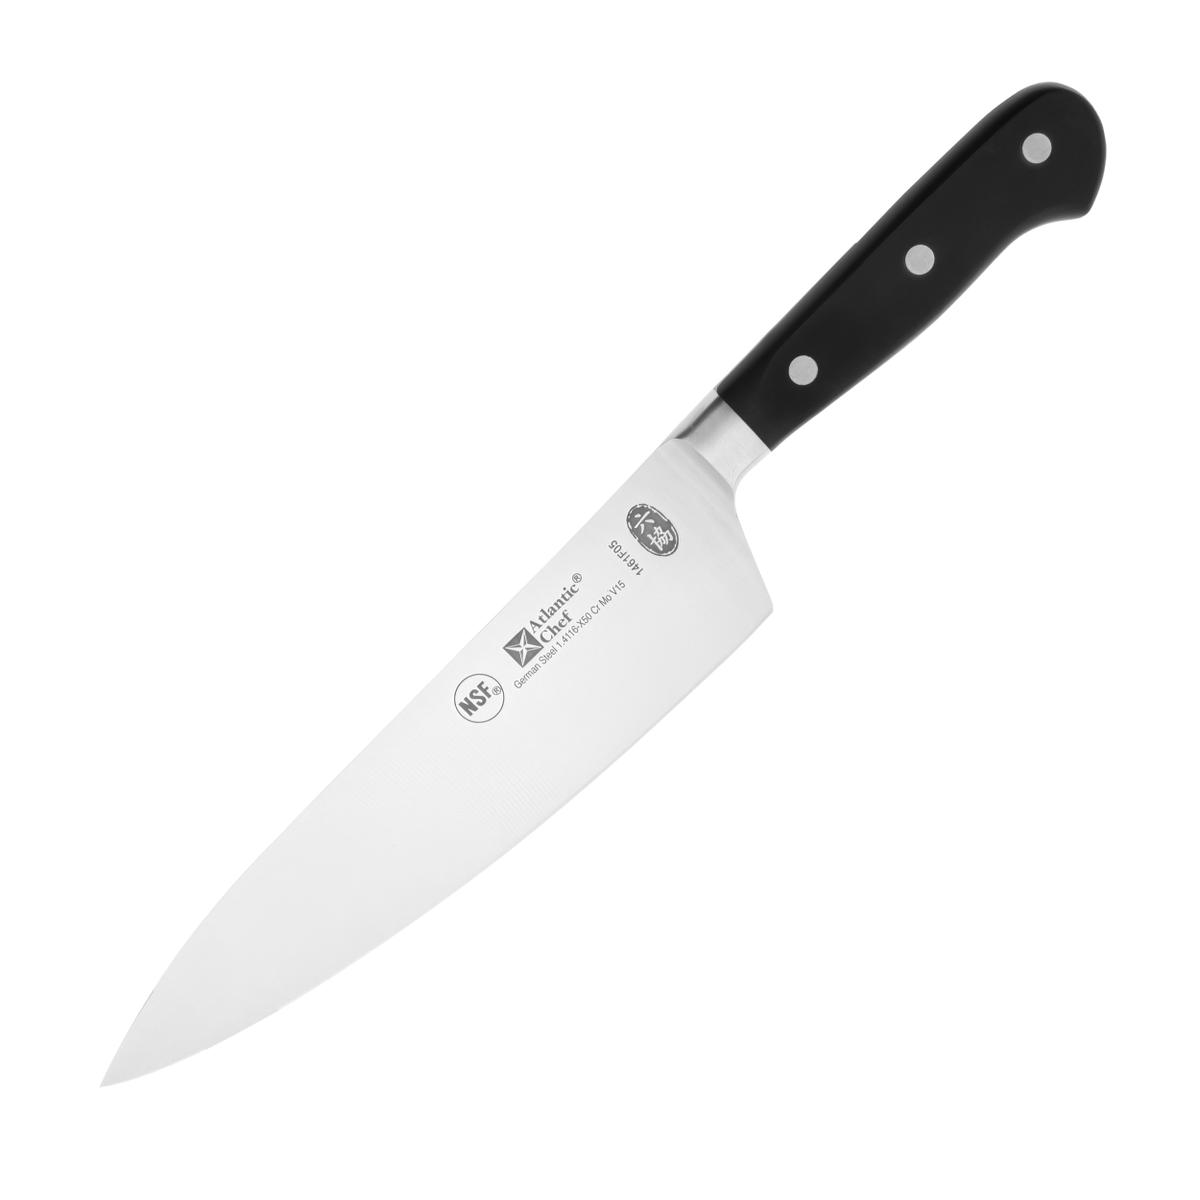 Atlantic Chef kuty nóż szefa kuchni 21cm 1461F05